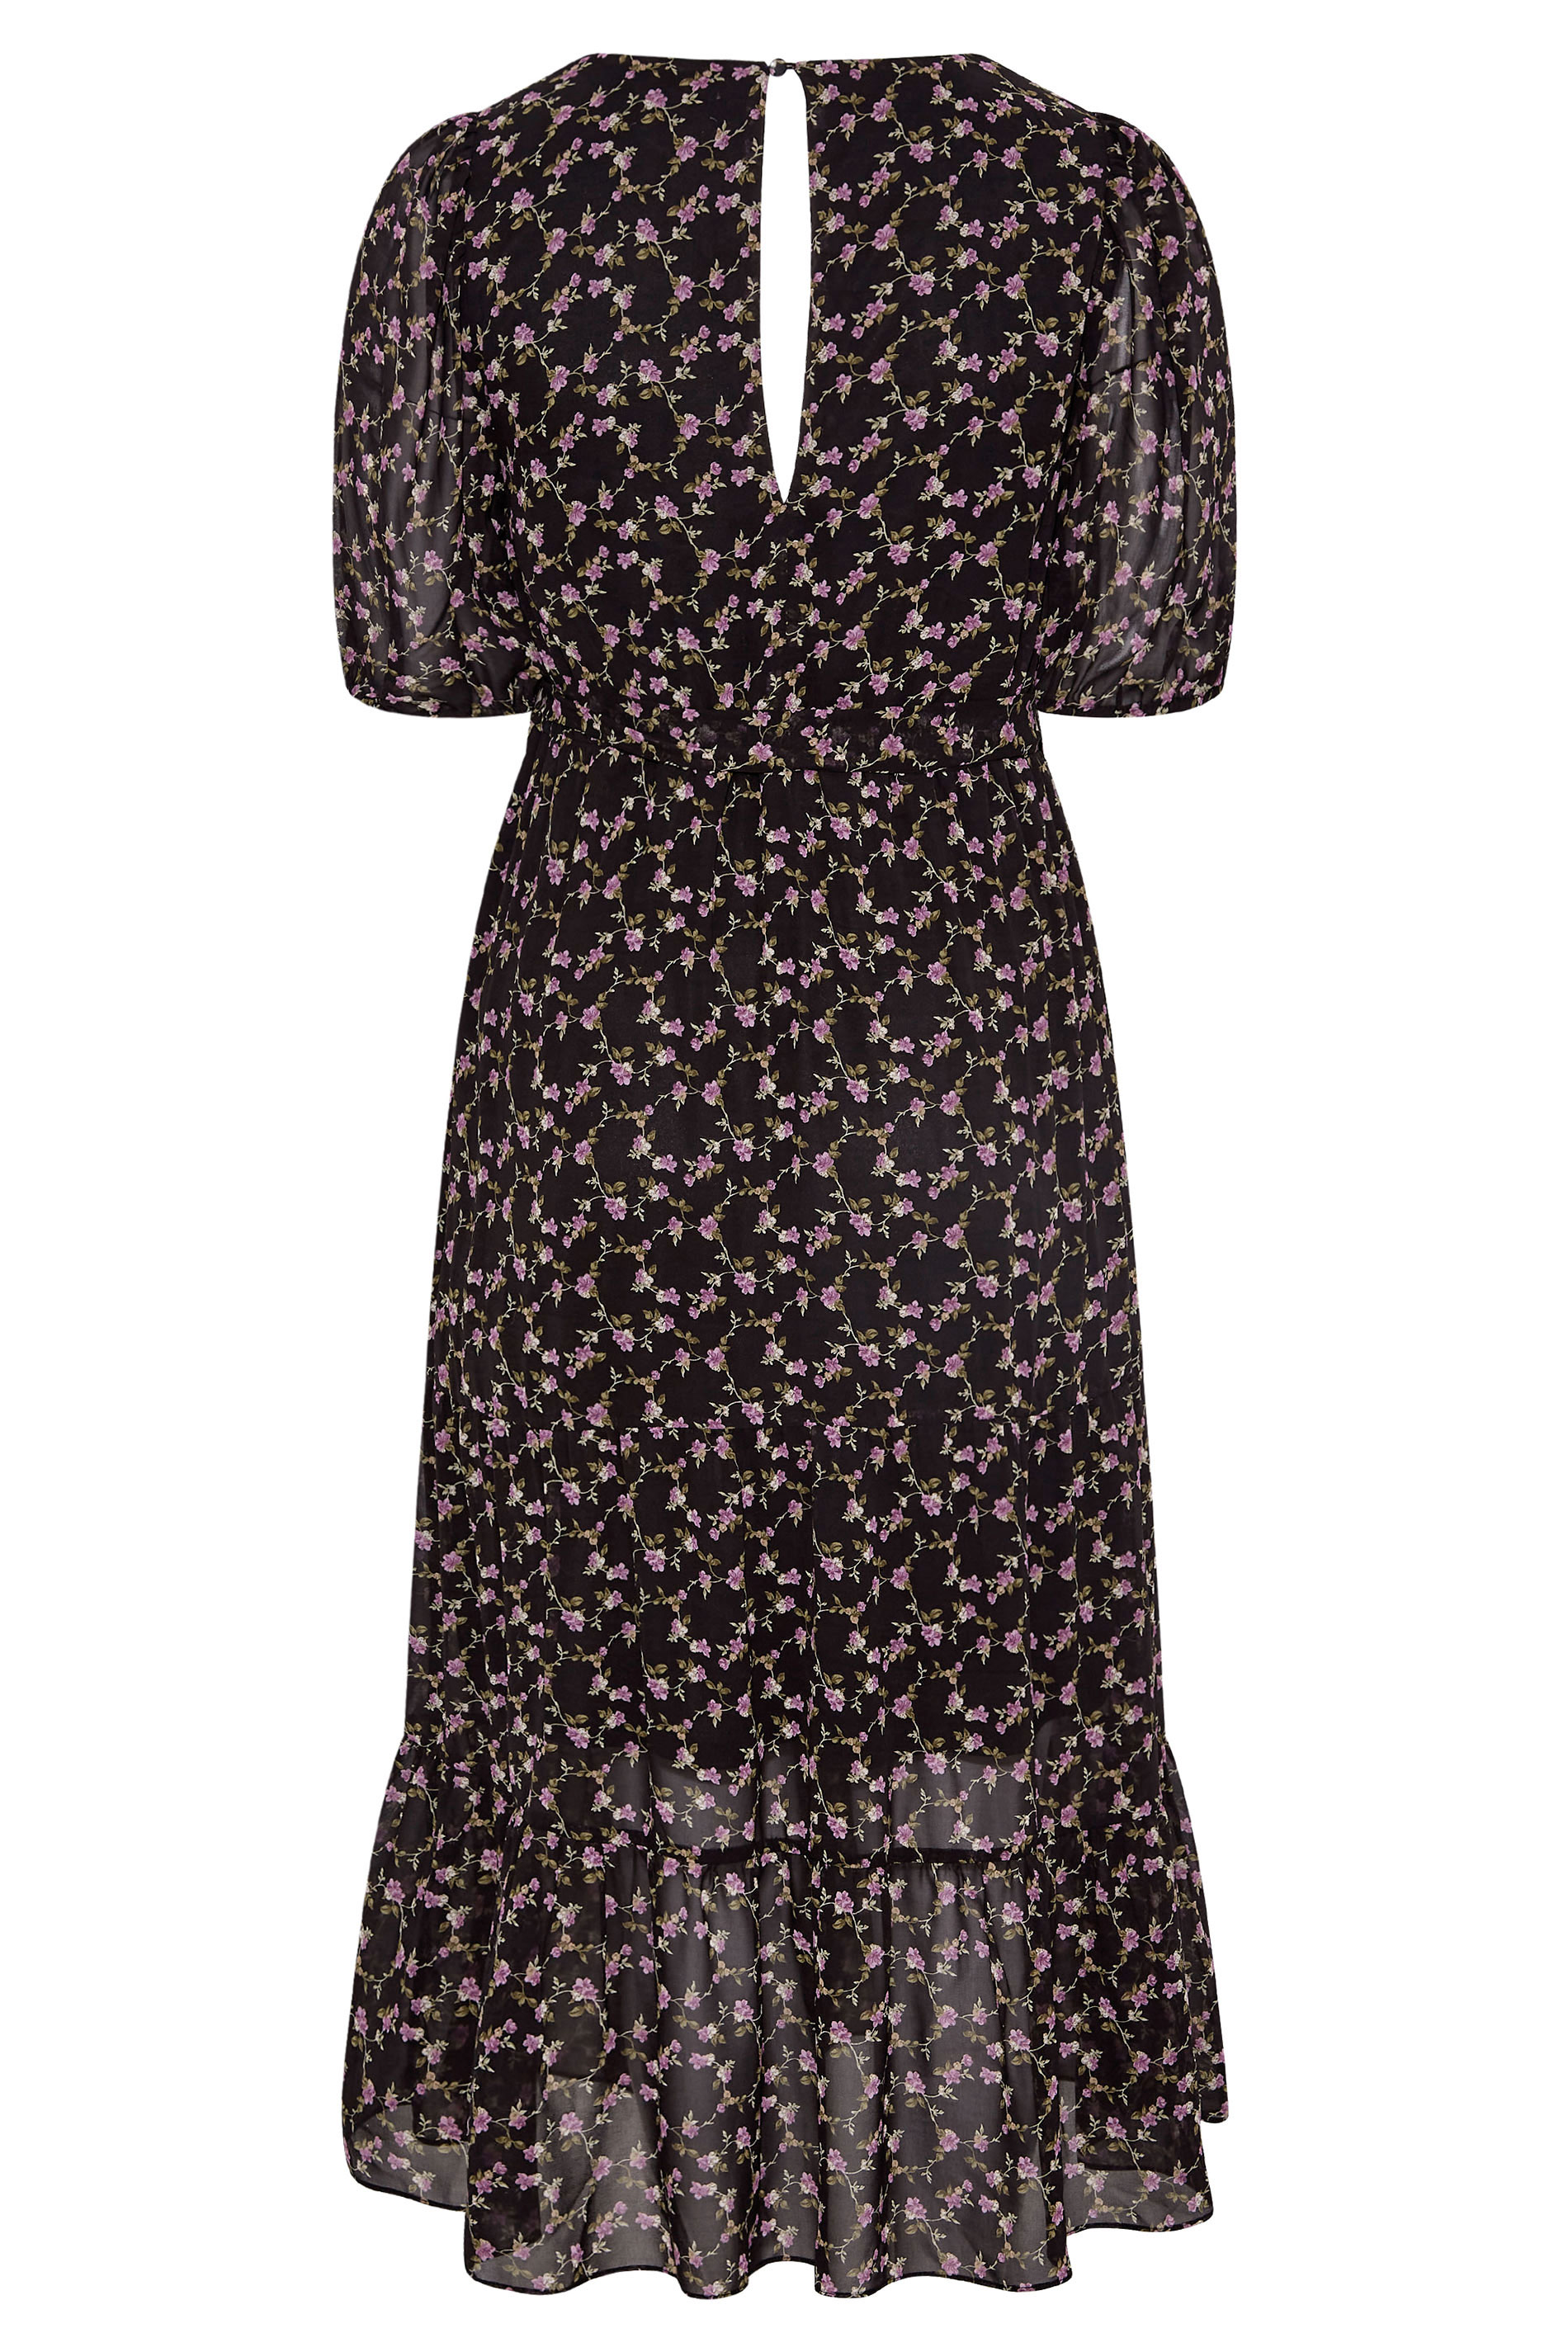 Robes Grande Taille Grande taille  Robes Occasions Spéciales | YOURS LONDON - Robe Maxi Noire Smocké Petite Fleurs - VS06613